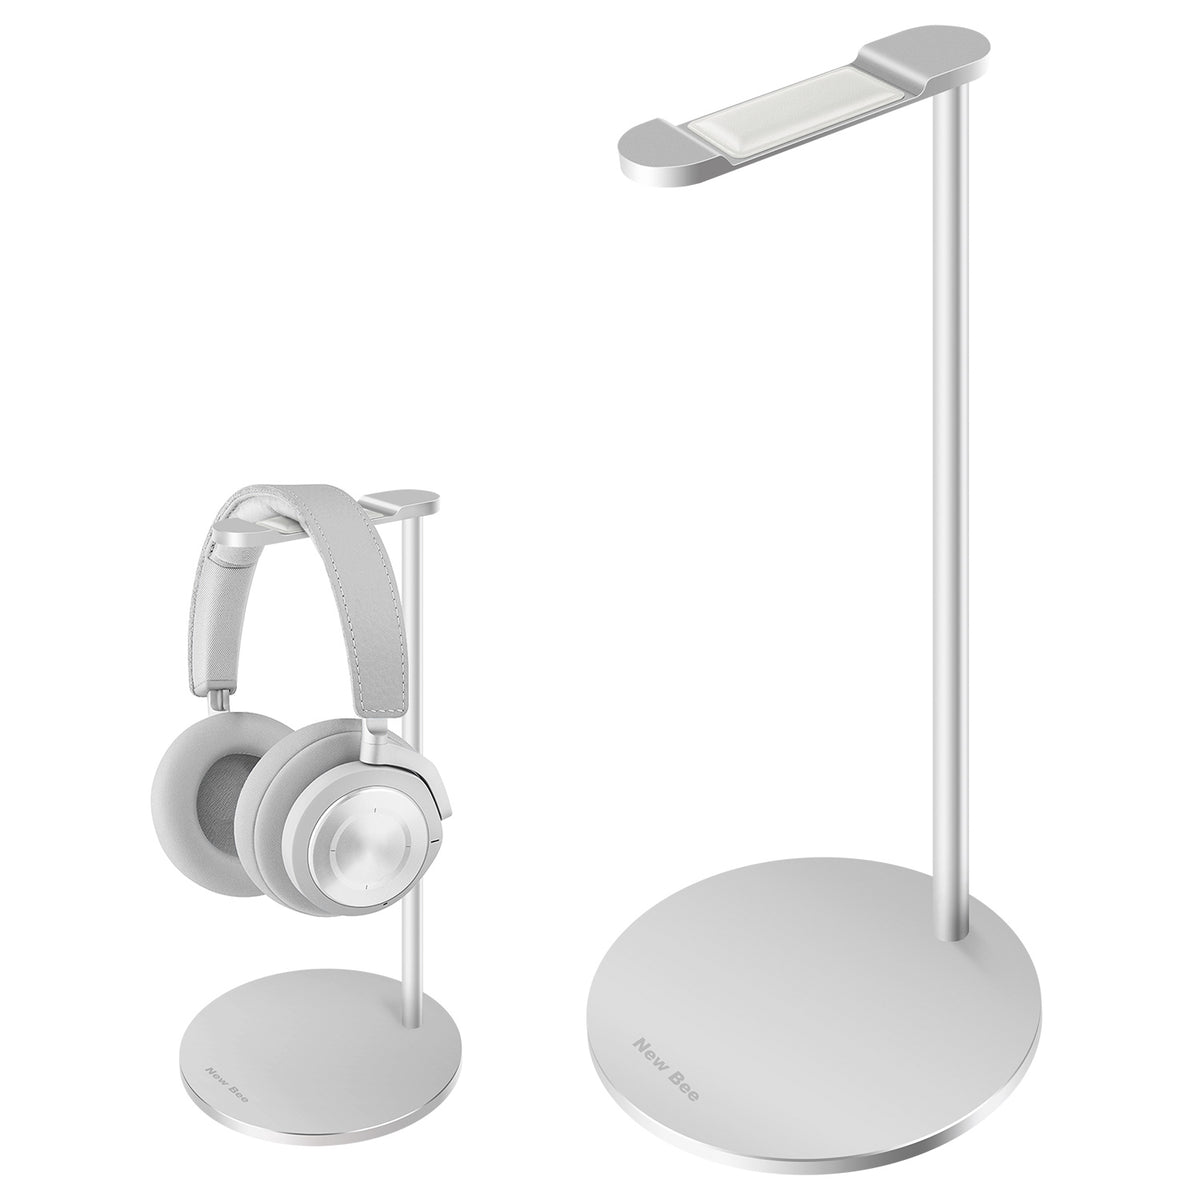 Aluminum Alloy Headphone Stand